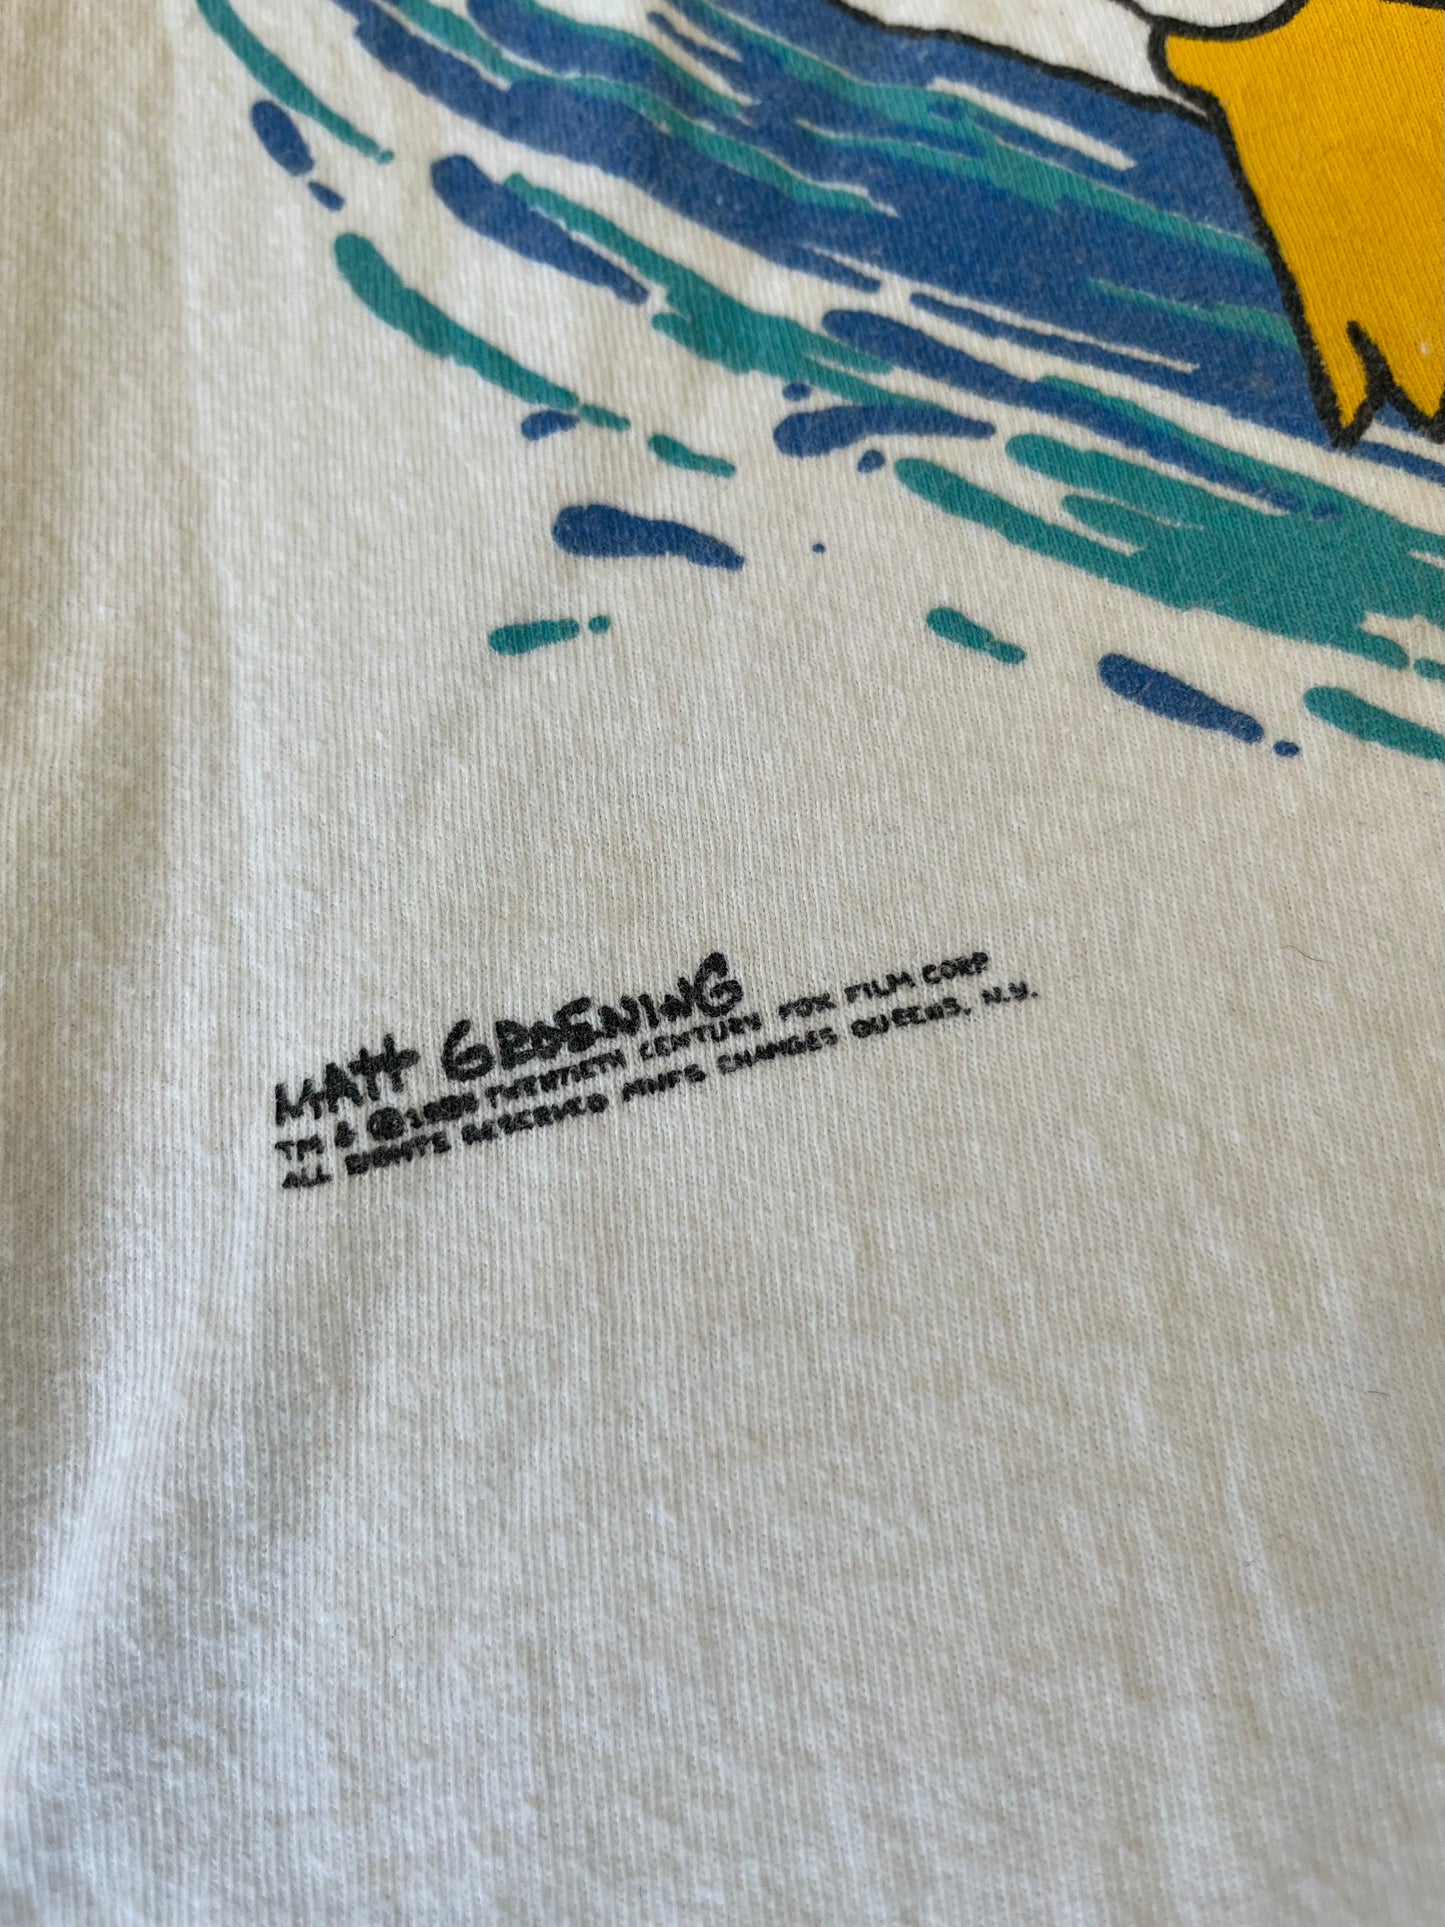 Bart Simpson vintage tshirt